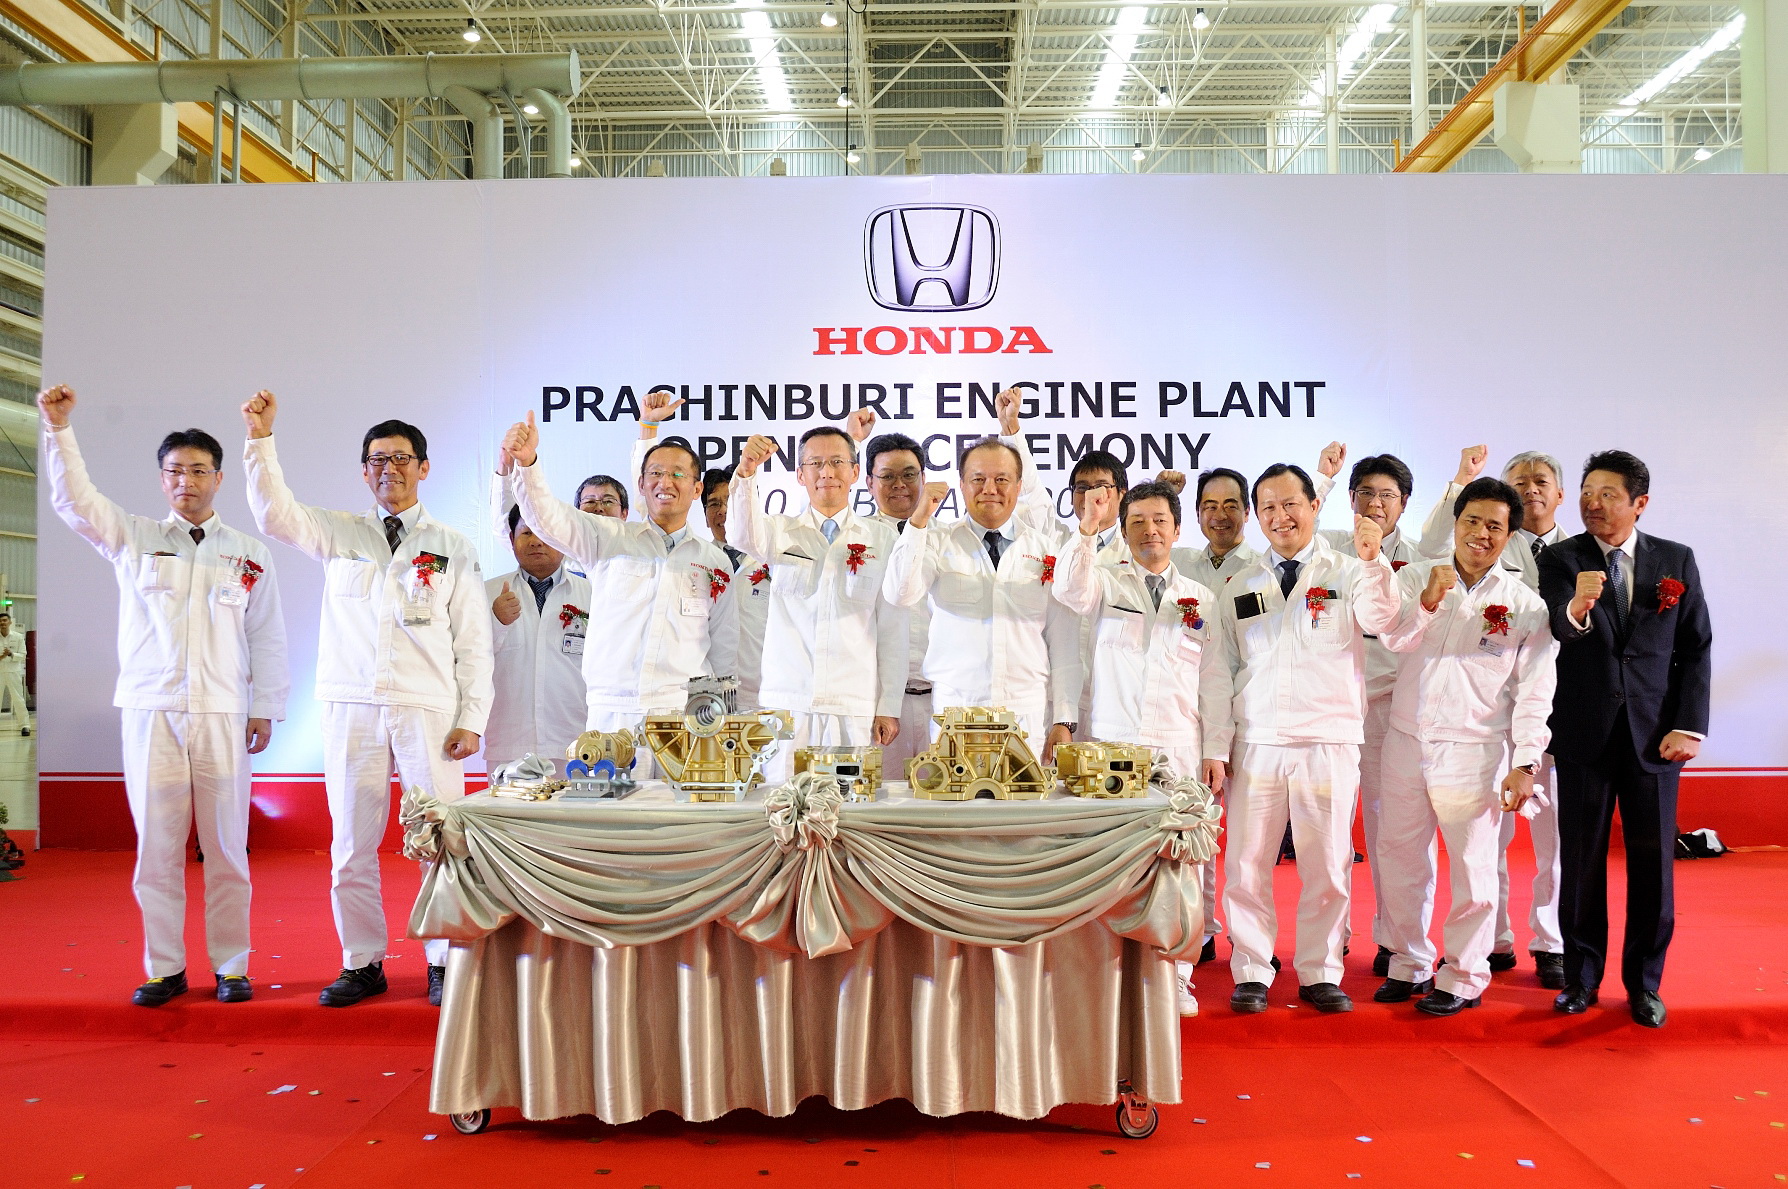 Hondas new Prachinburi plant